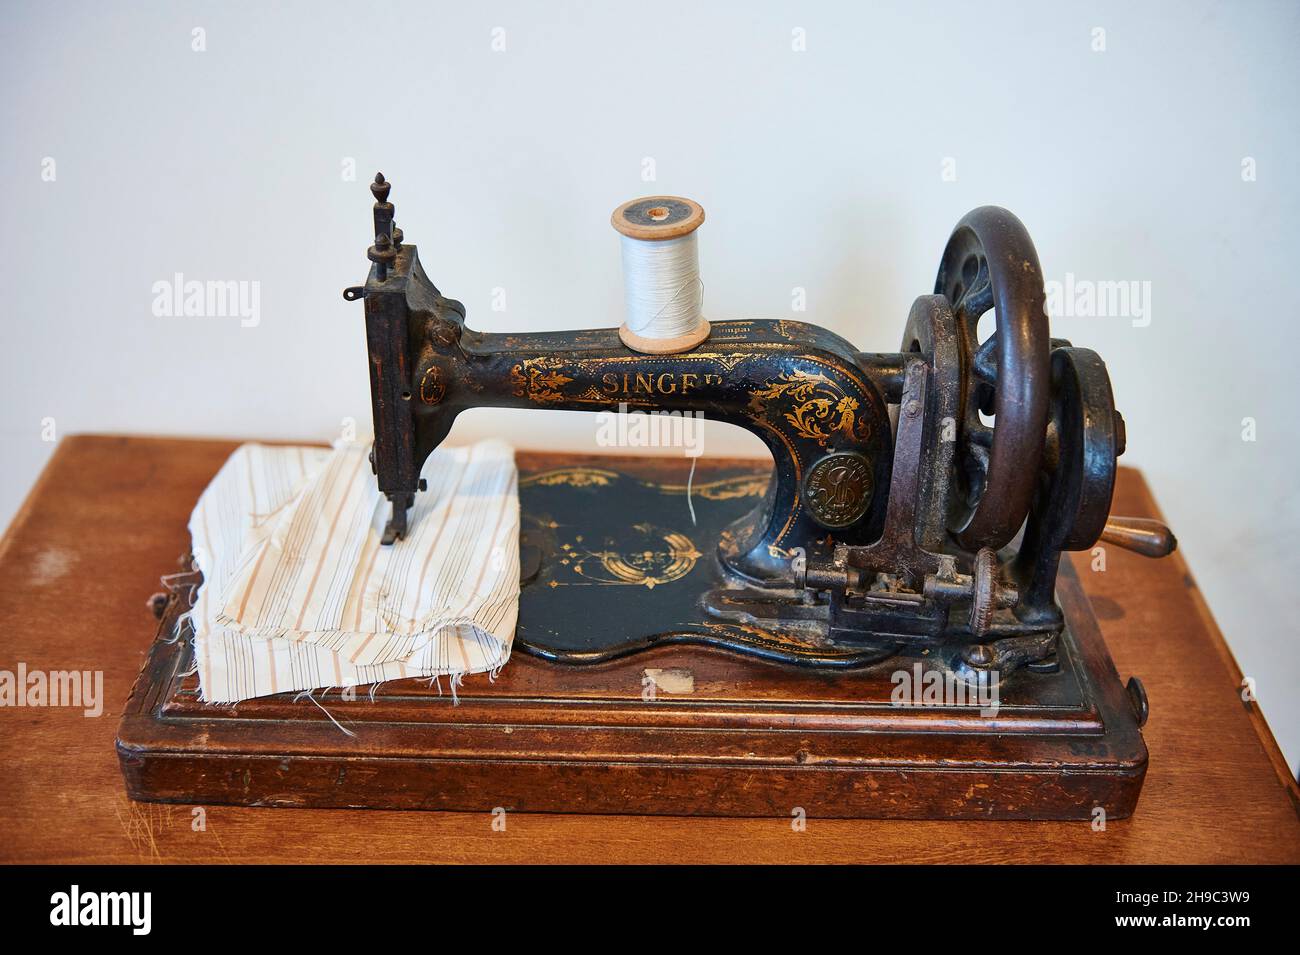 Old Singer Sewing Machine, Interior of the Ethnographic Museum of Artziniega Stock Photo